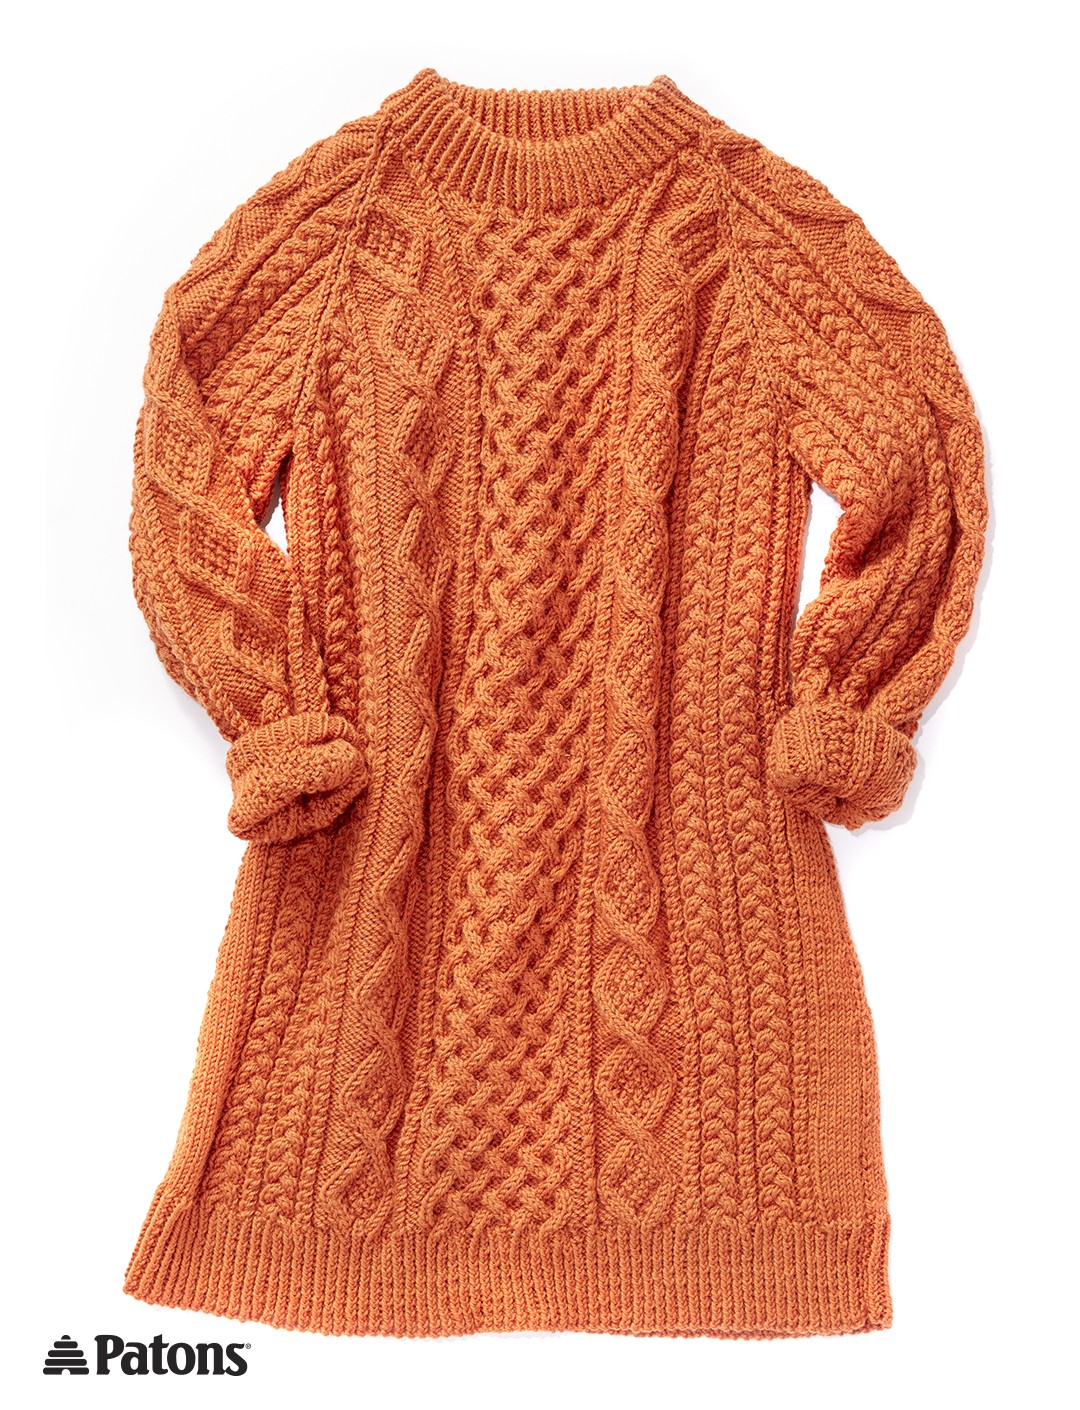 Free knitting pattern for Honeycomb Aran Sweater Dress